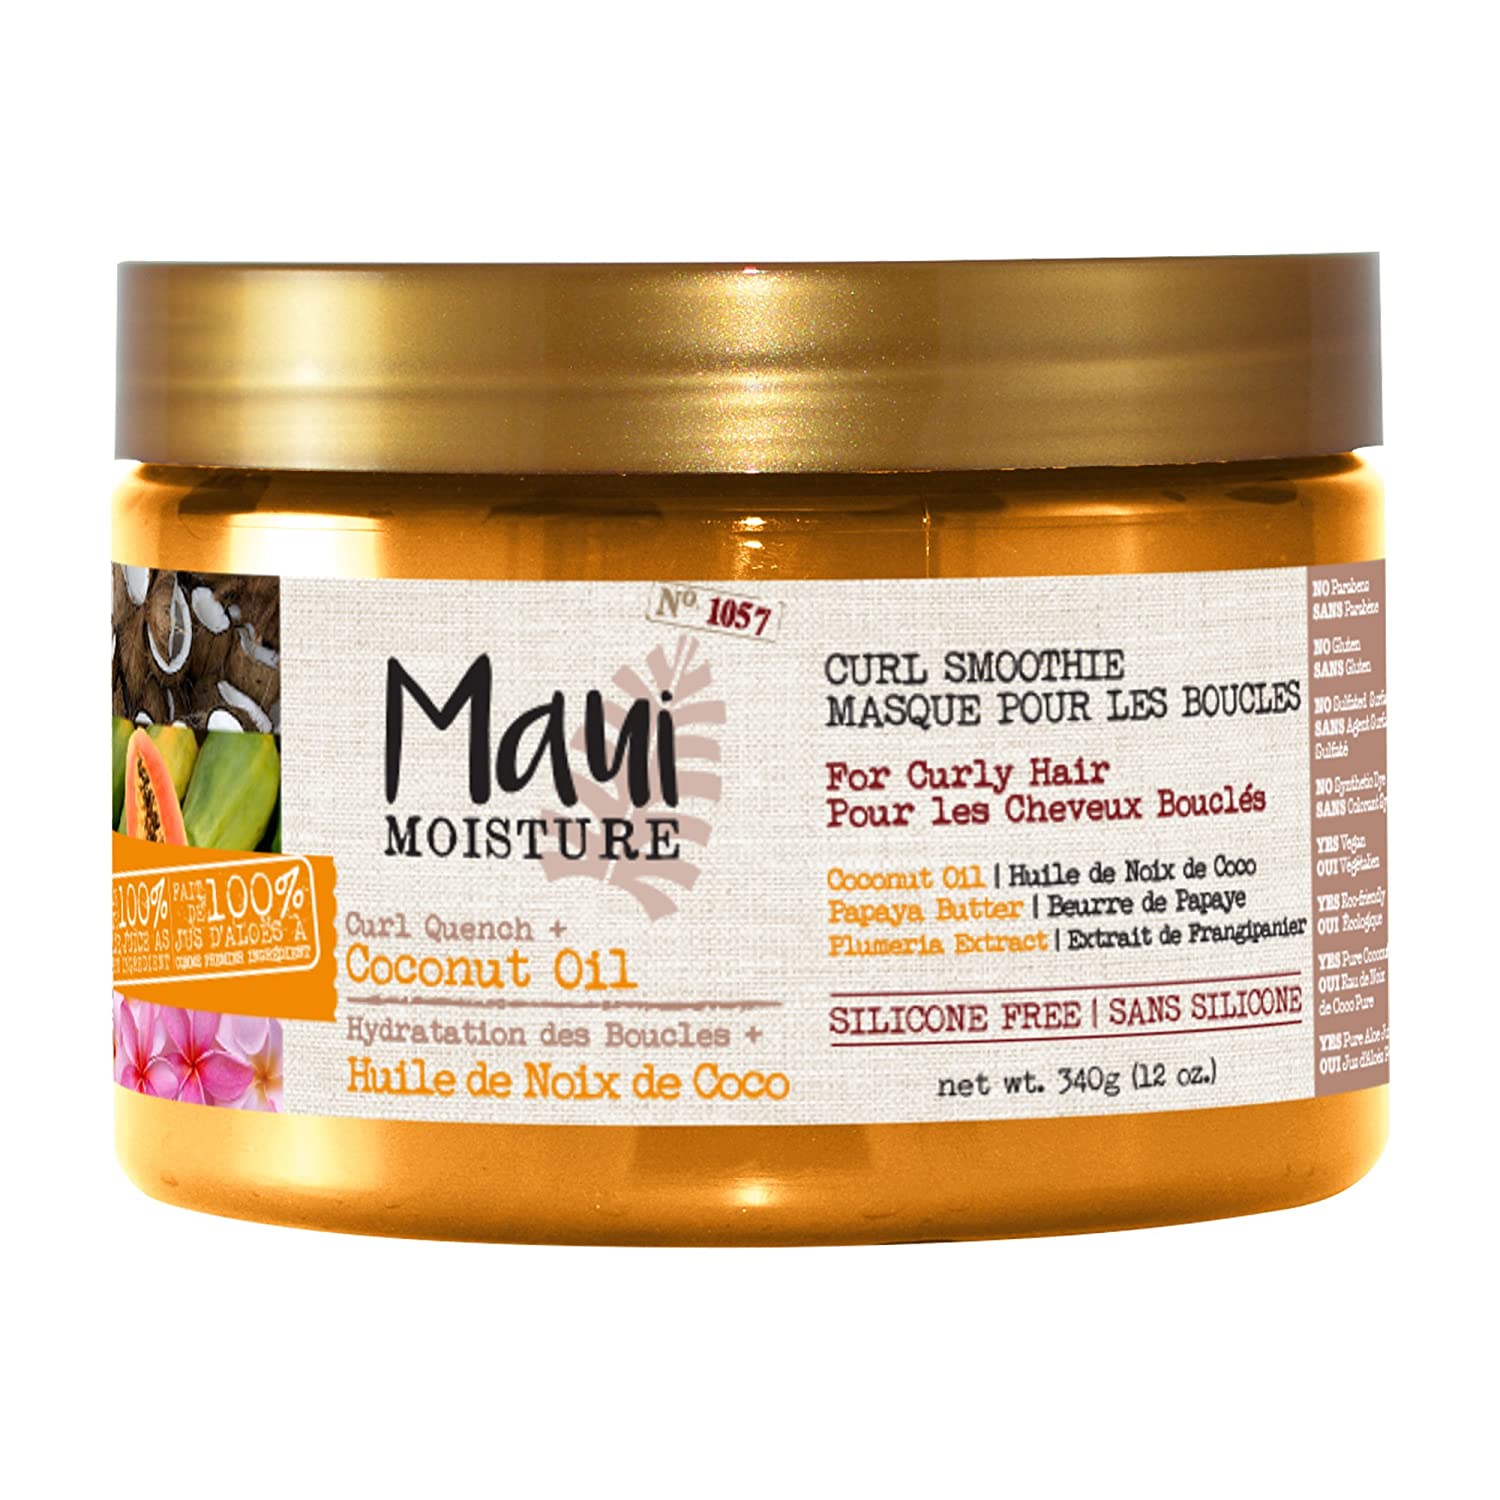 Maui - Moisture Curl Quench Coconut Oil Smoothie 12oz